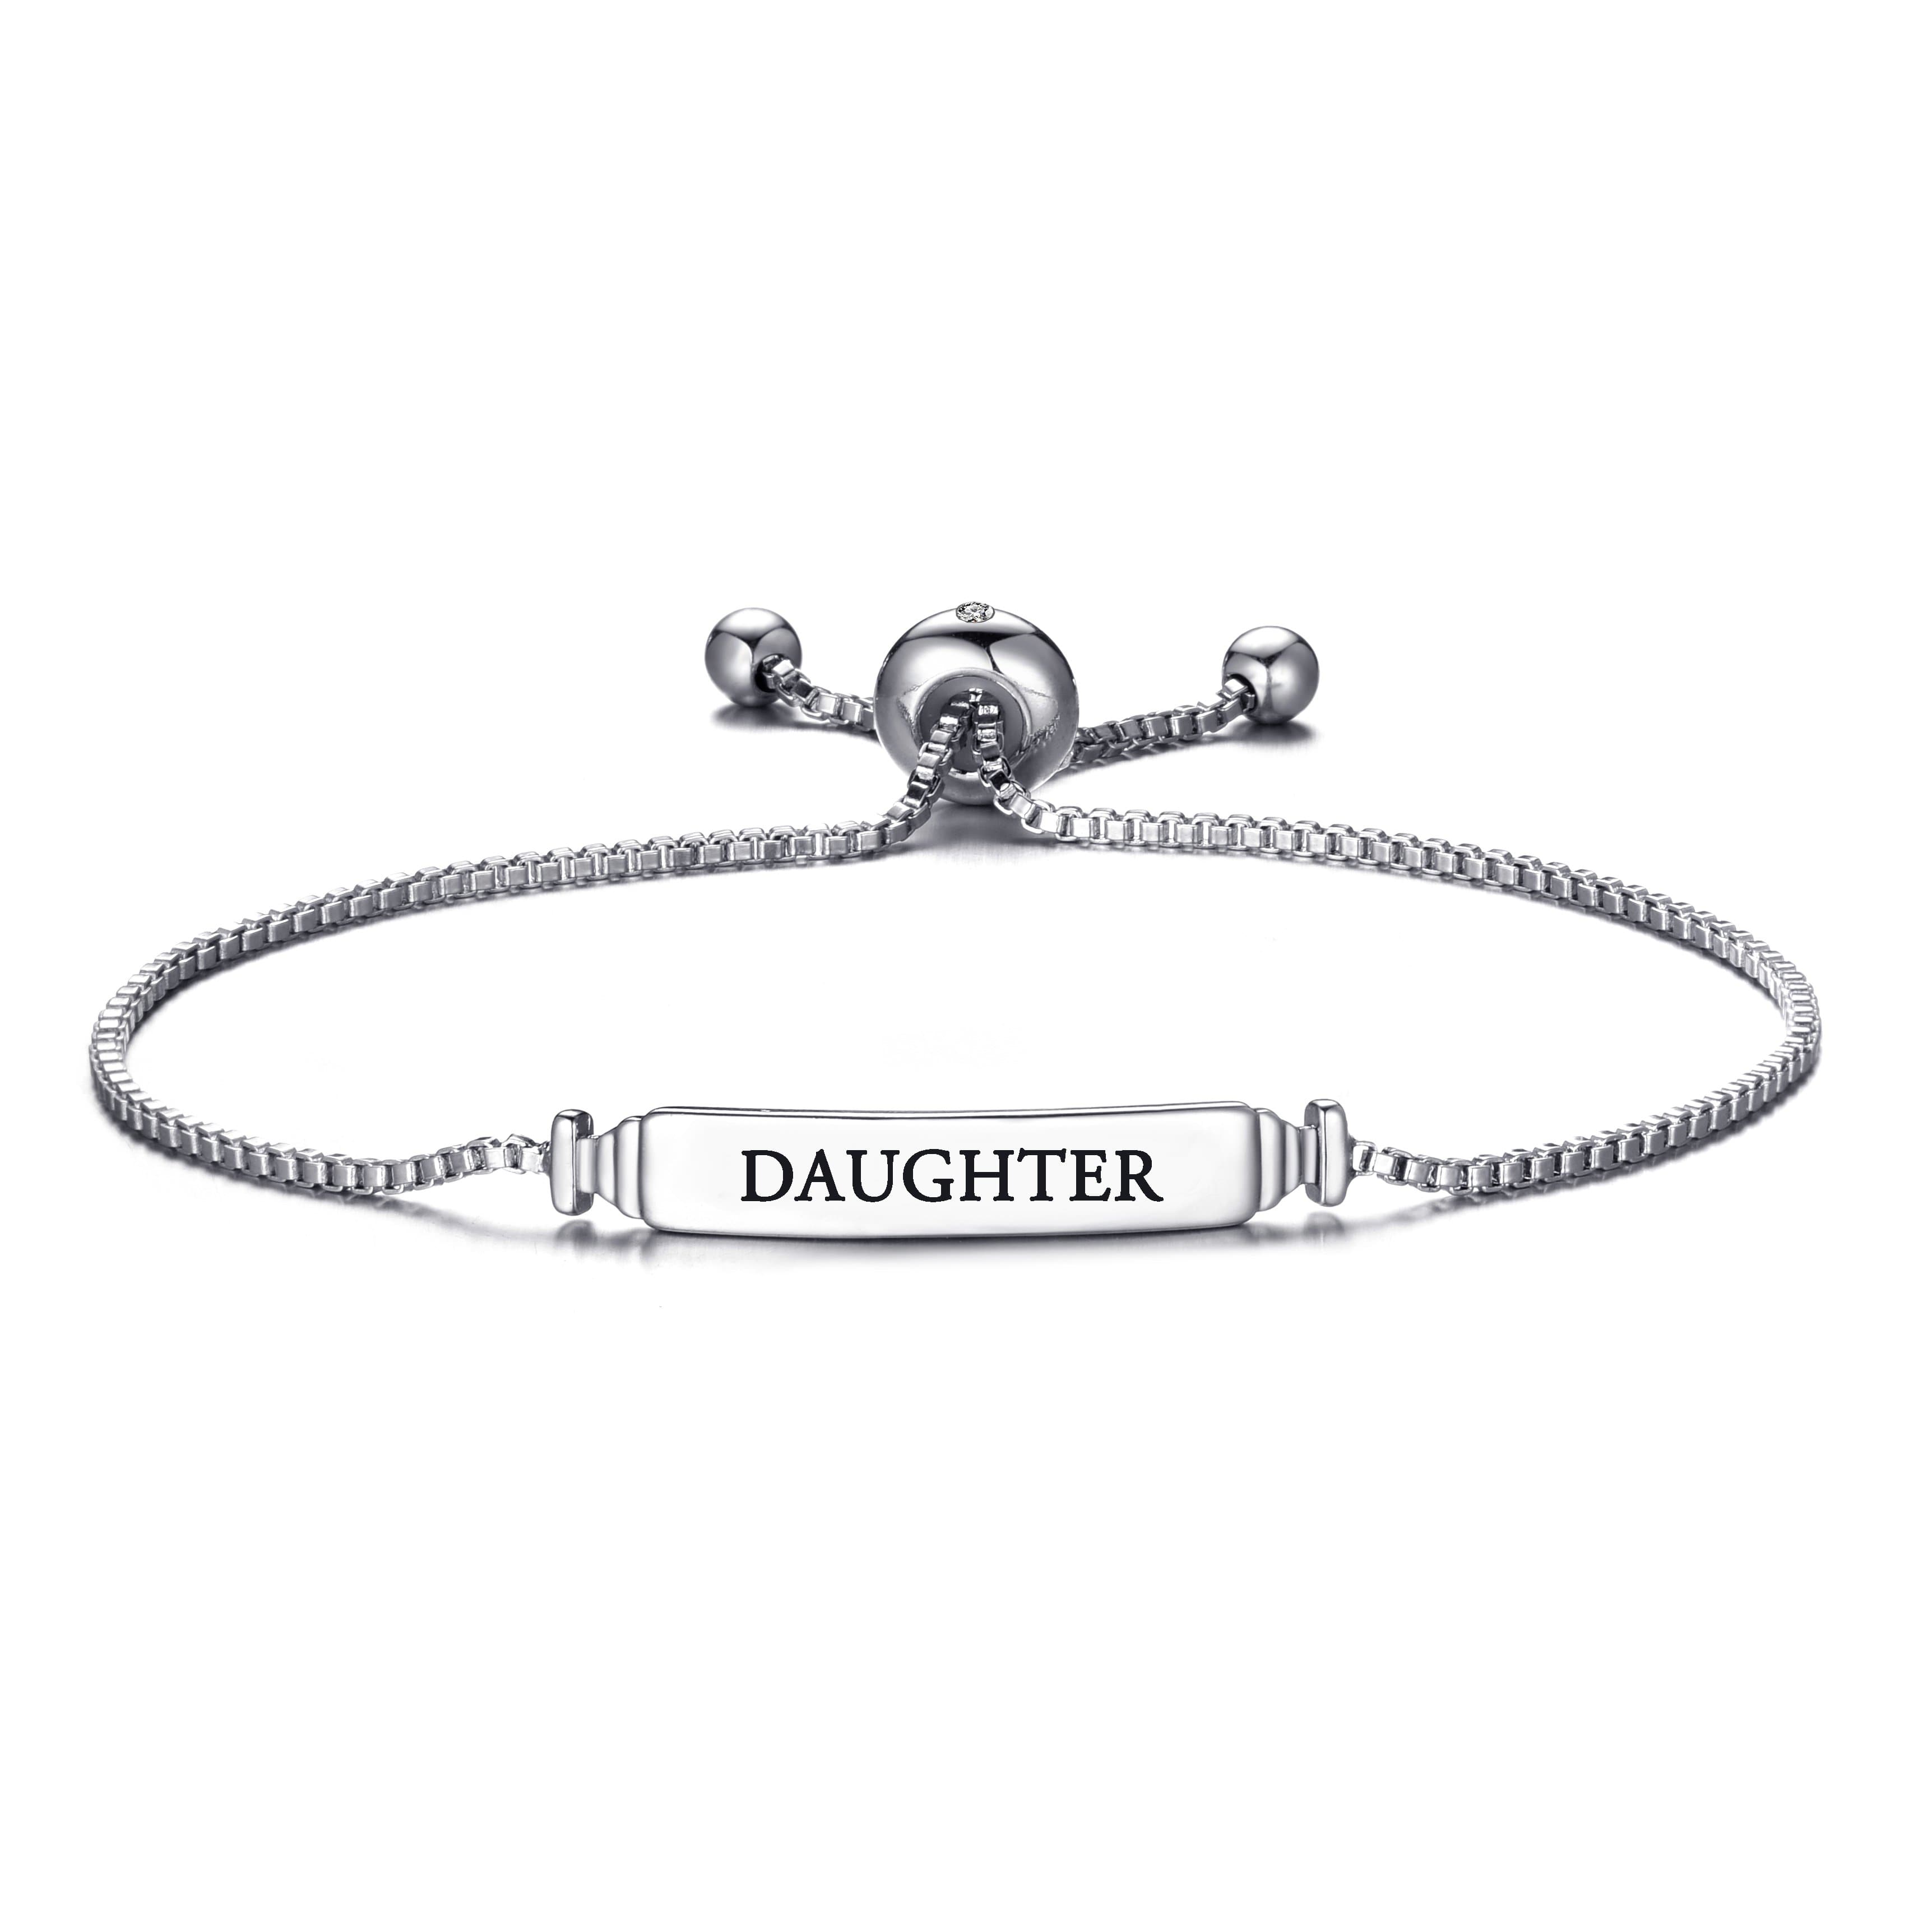 Daughter ID Friendship Bracelet Created with Zircondia® Crystals by Philip Jones Jewellery